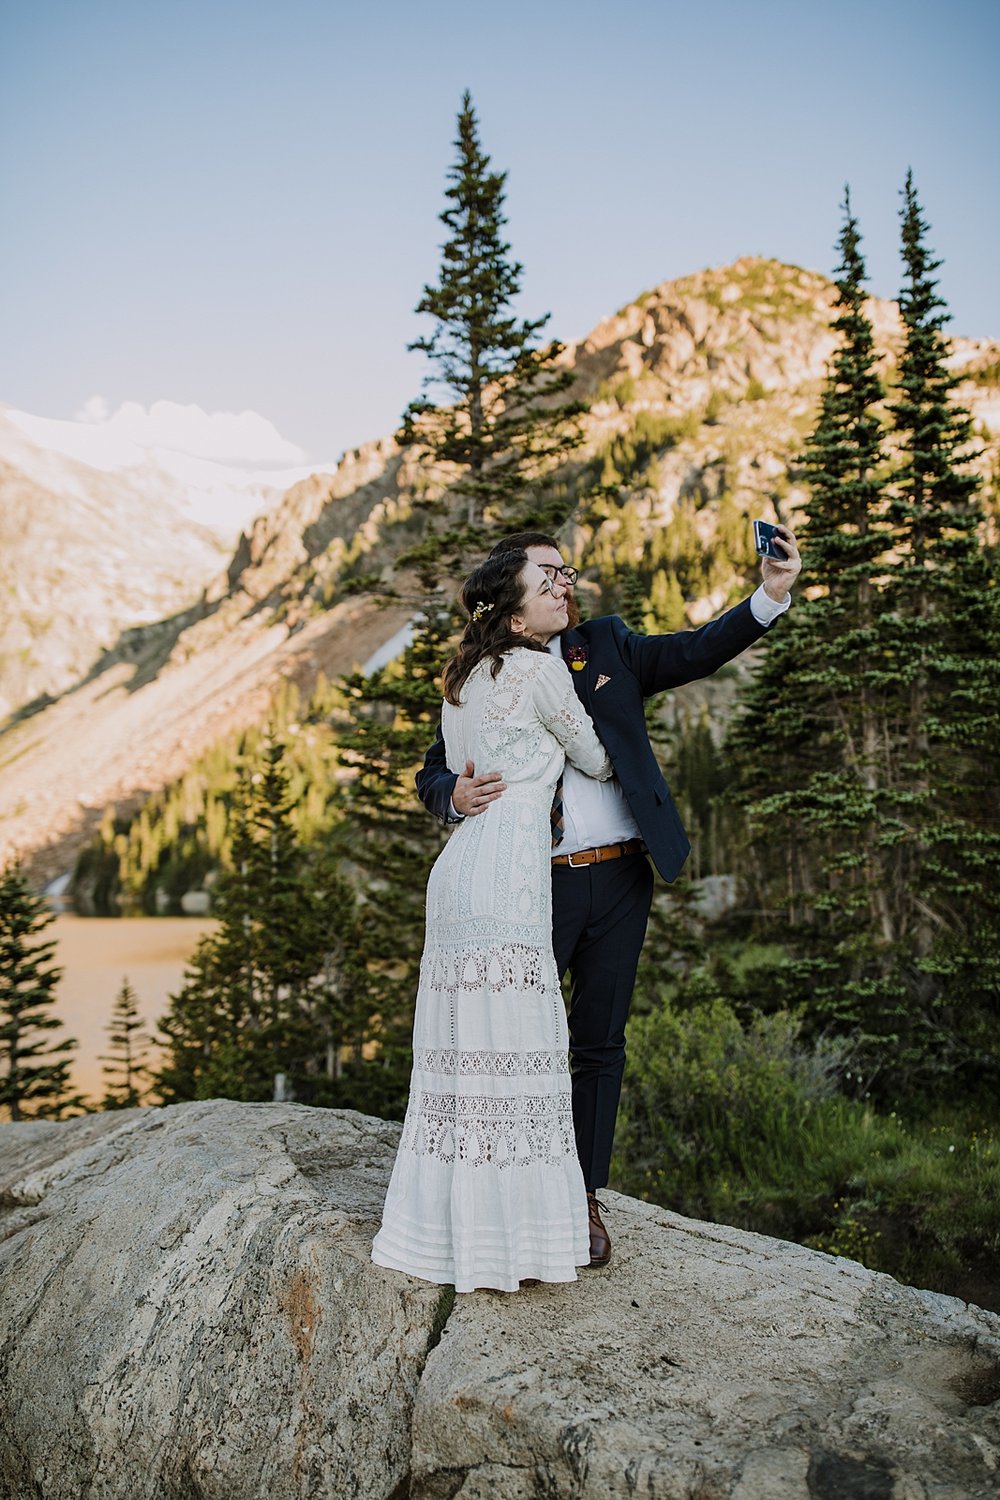 wedding couple taking a selfie, eloping above tree line, post vow celebration, honeymoon roadtrip, western states roadtrip, budget wedding dress, budget elopement, high alpine trail hiking